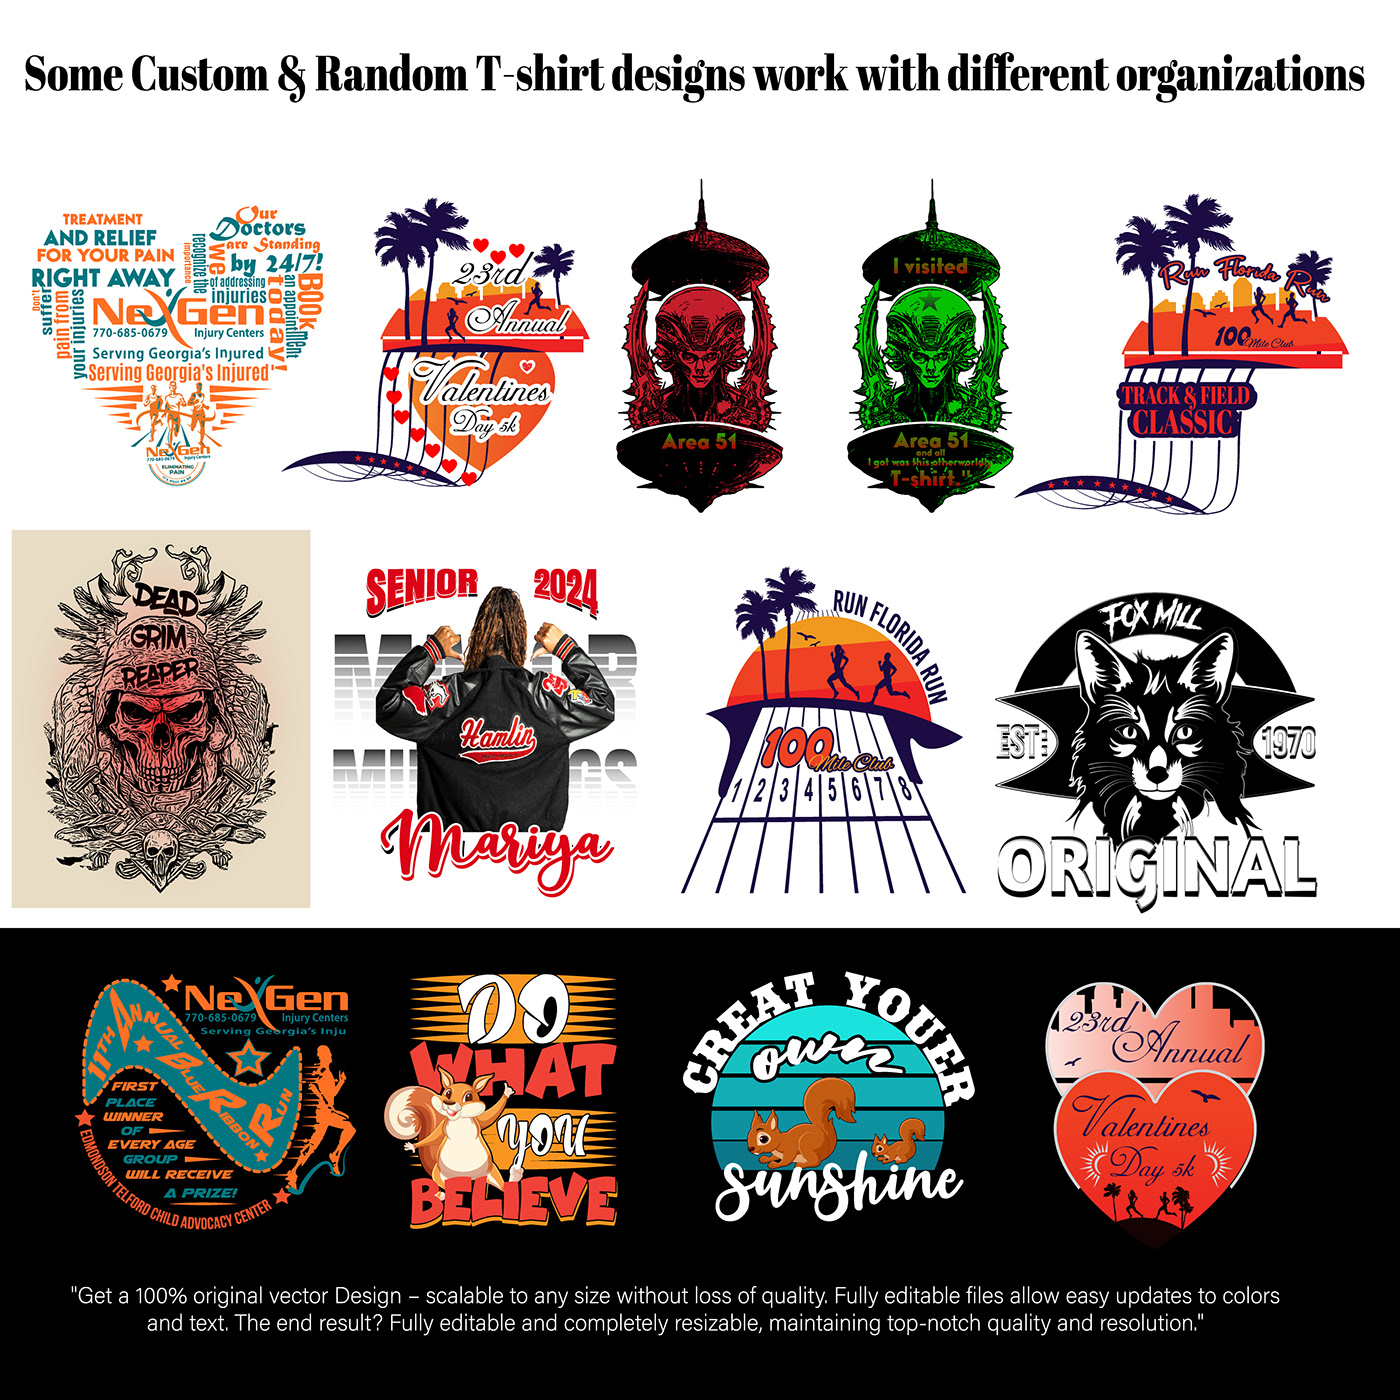 Some Custom & Random T-shirt designs work with different organizations
